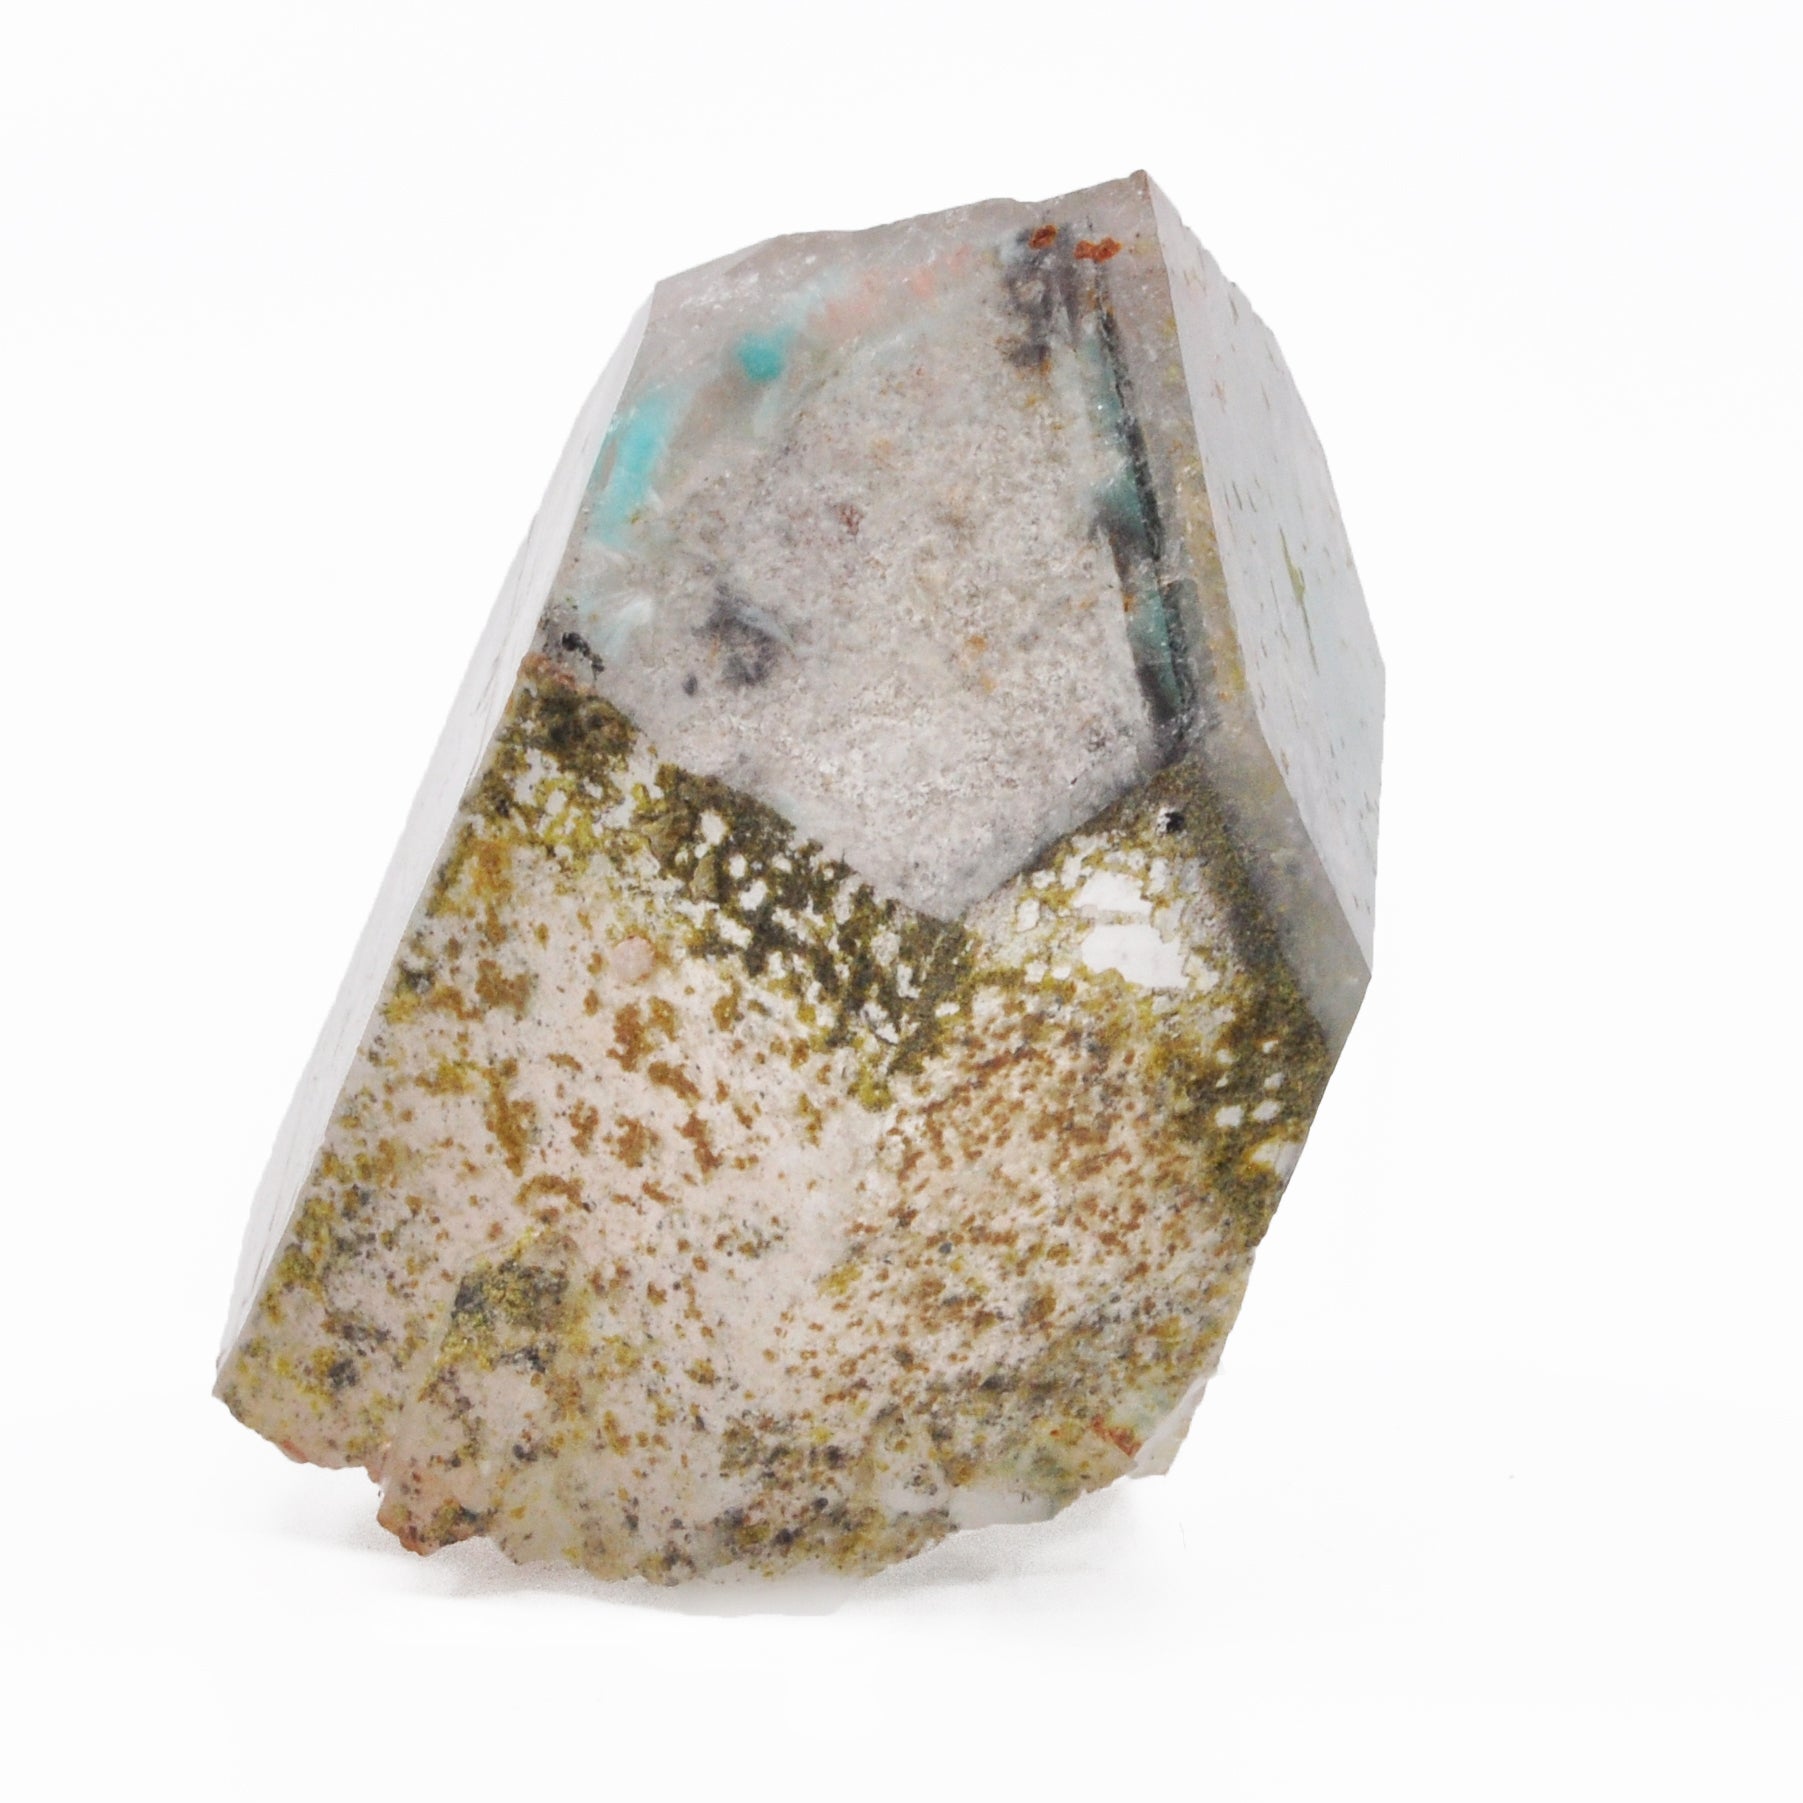 Ajoite in Quartz 2.65 inch 168 gram Natural Crystal Point - South Africa - EEX-487 - Crystalarium